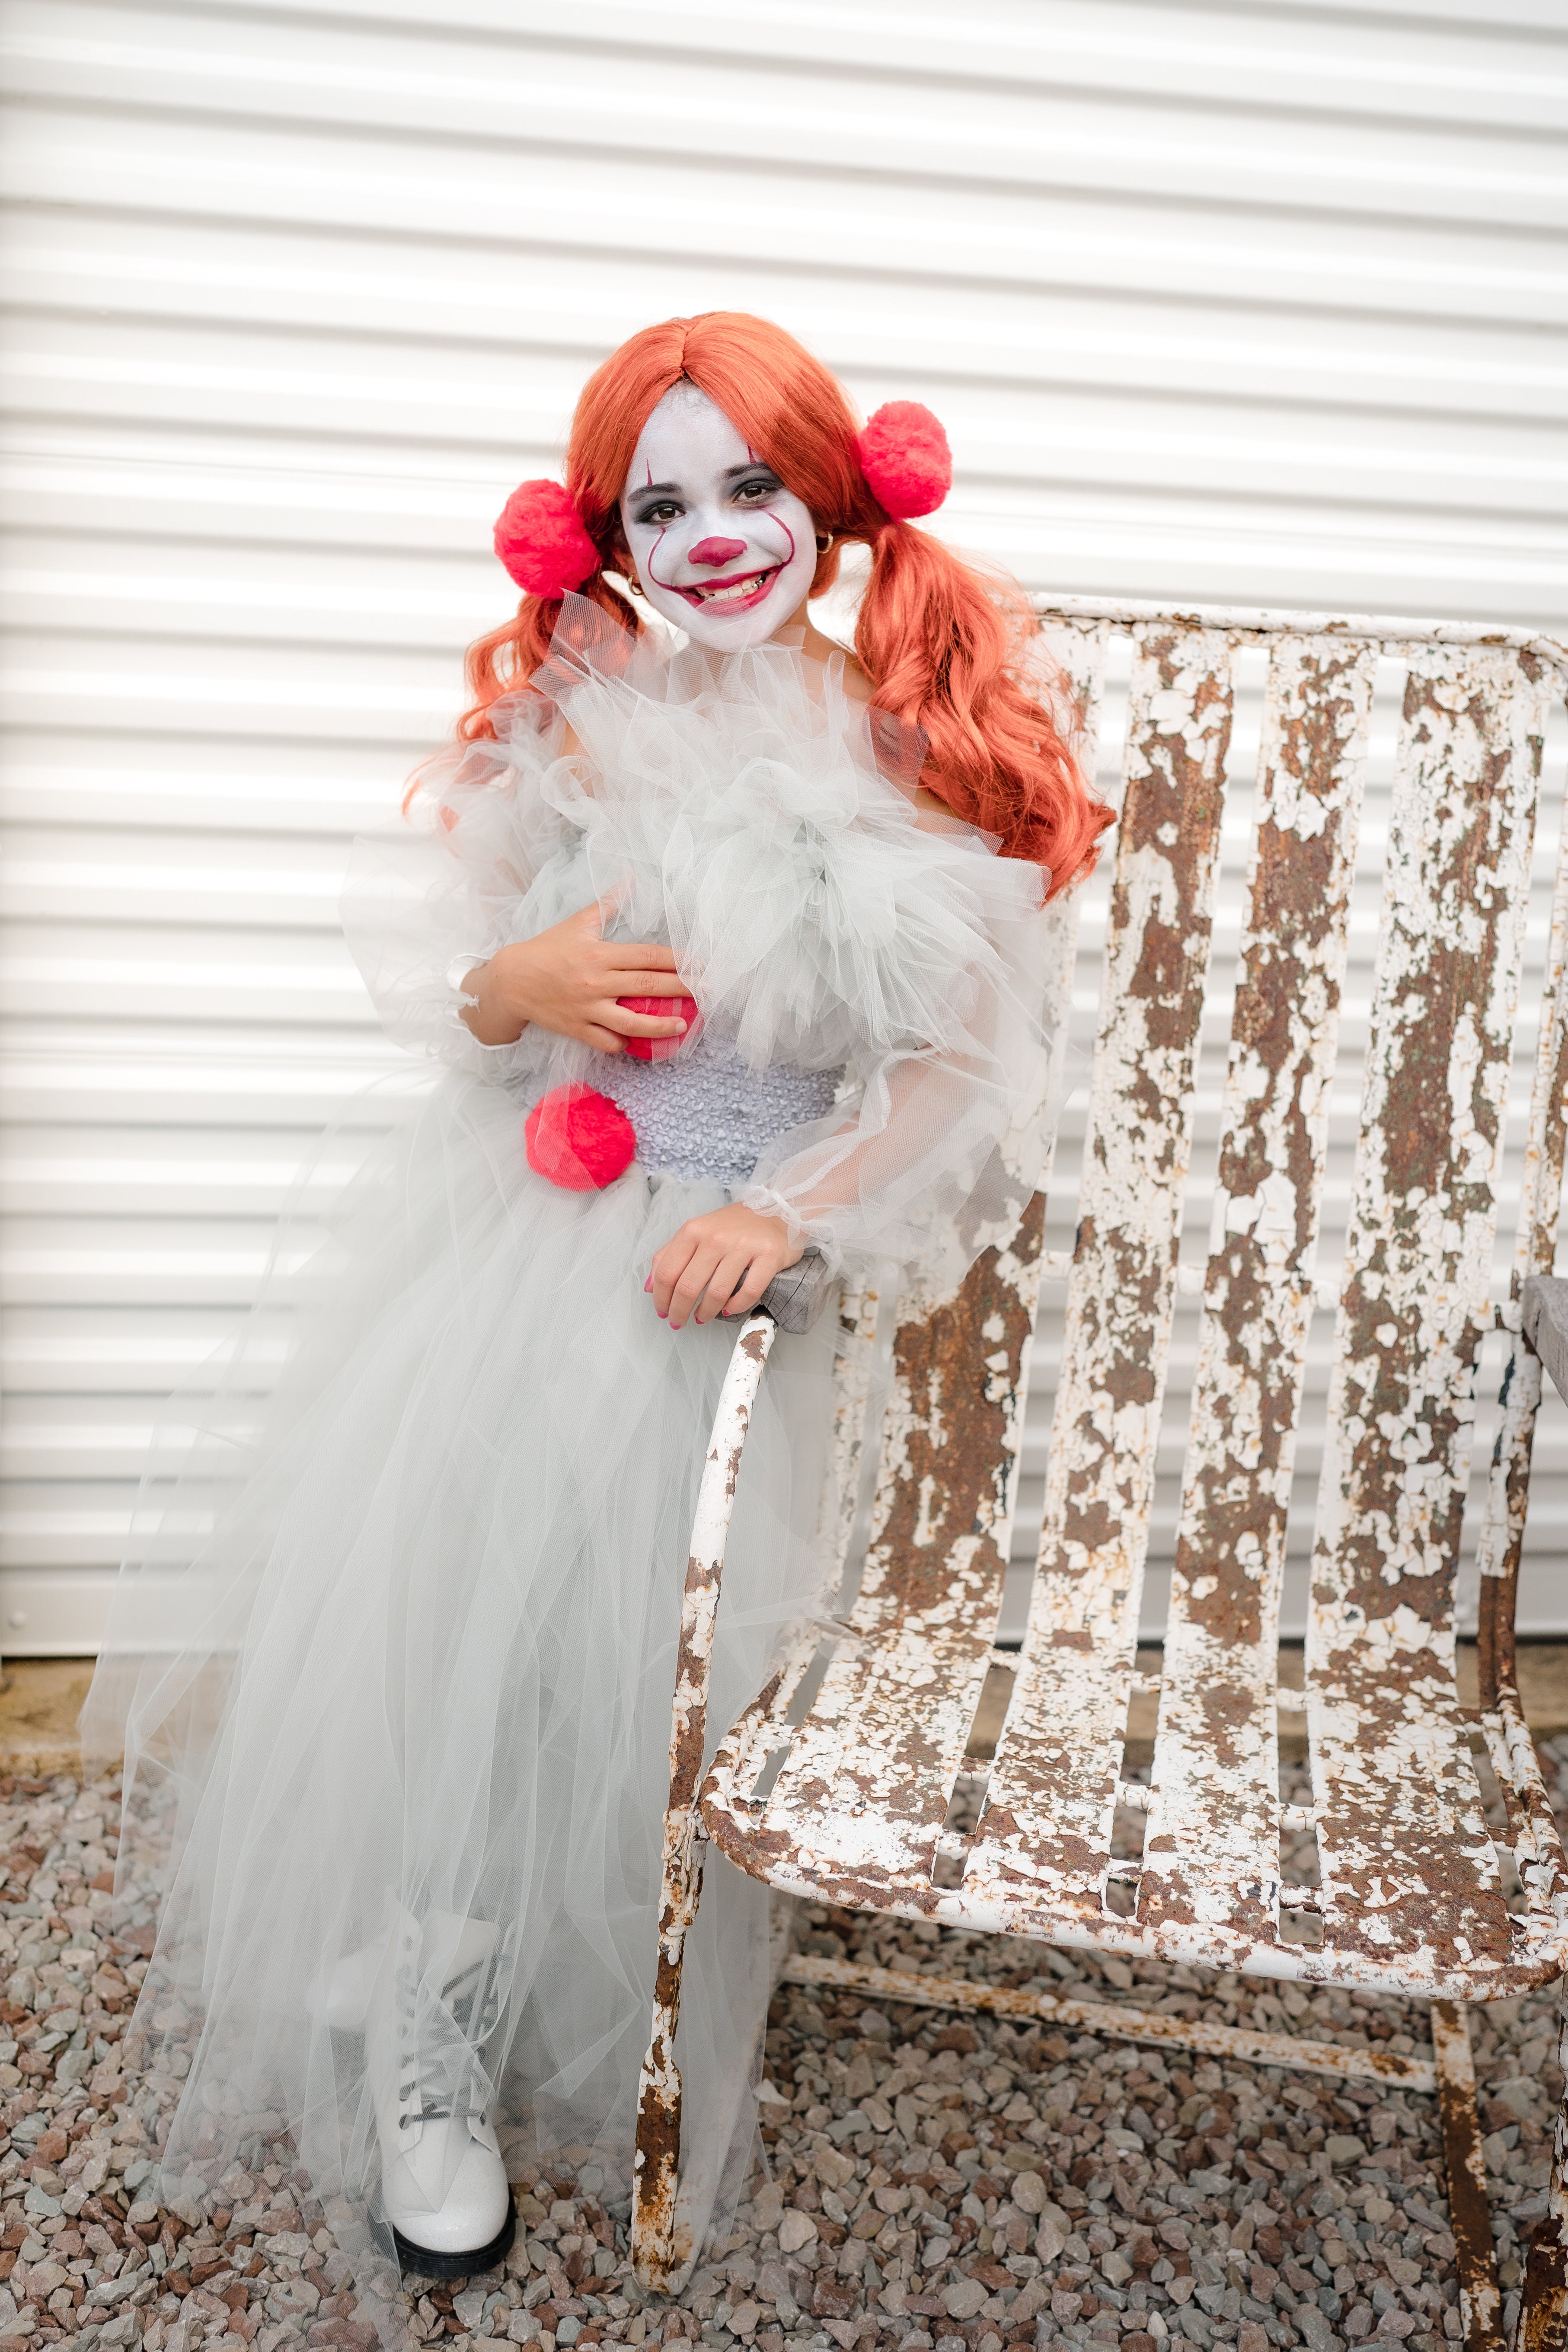 Clown Costume Dress